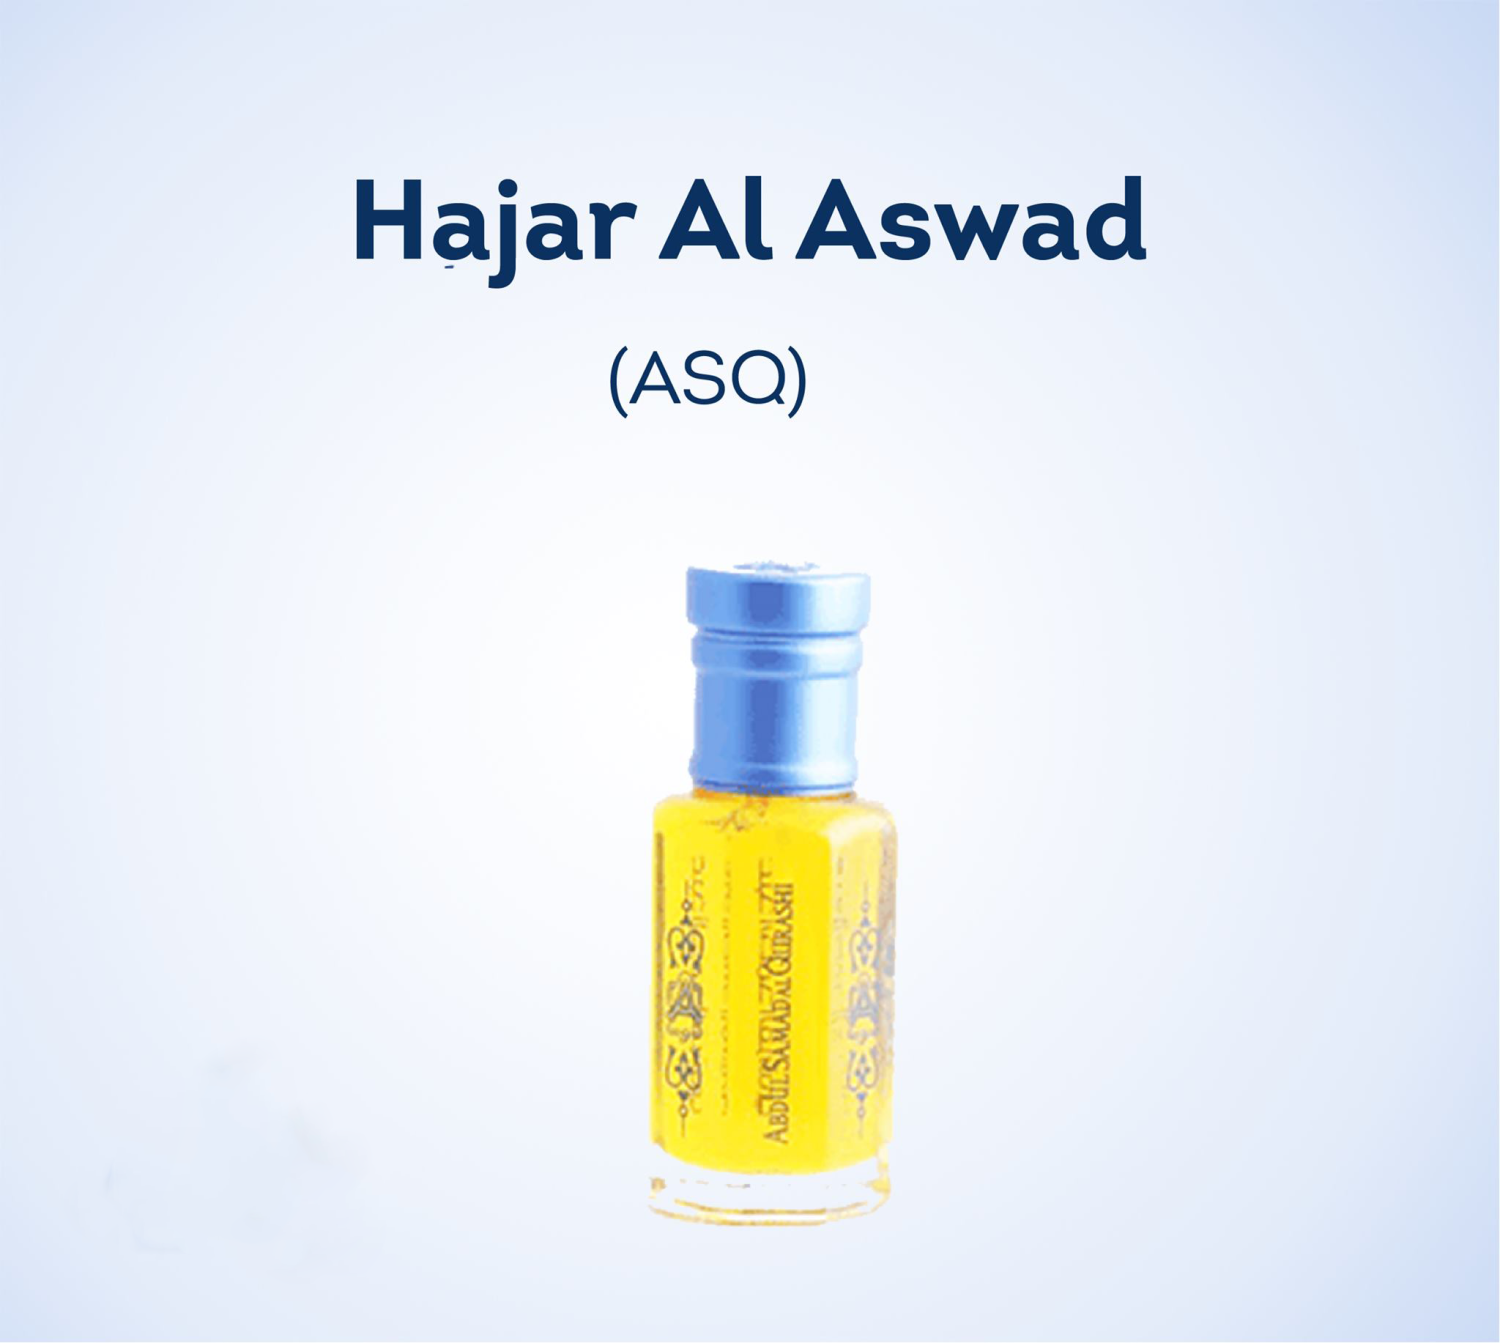 Hajar Al Aswad Attar